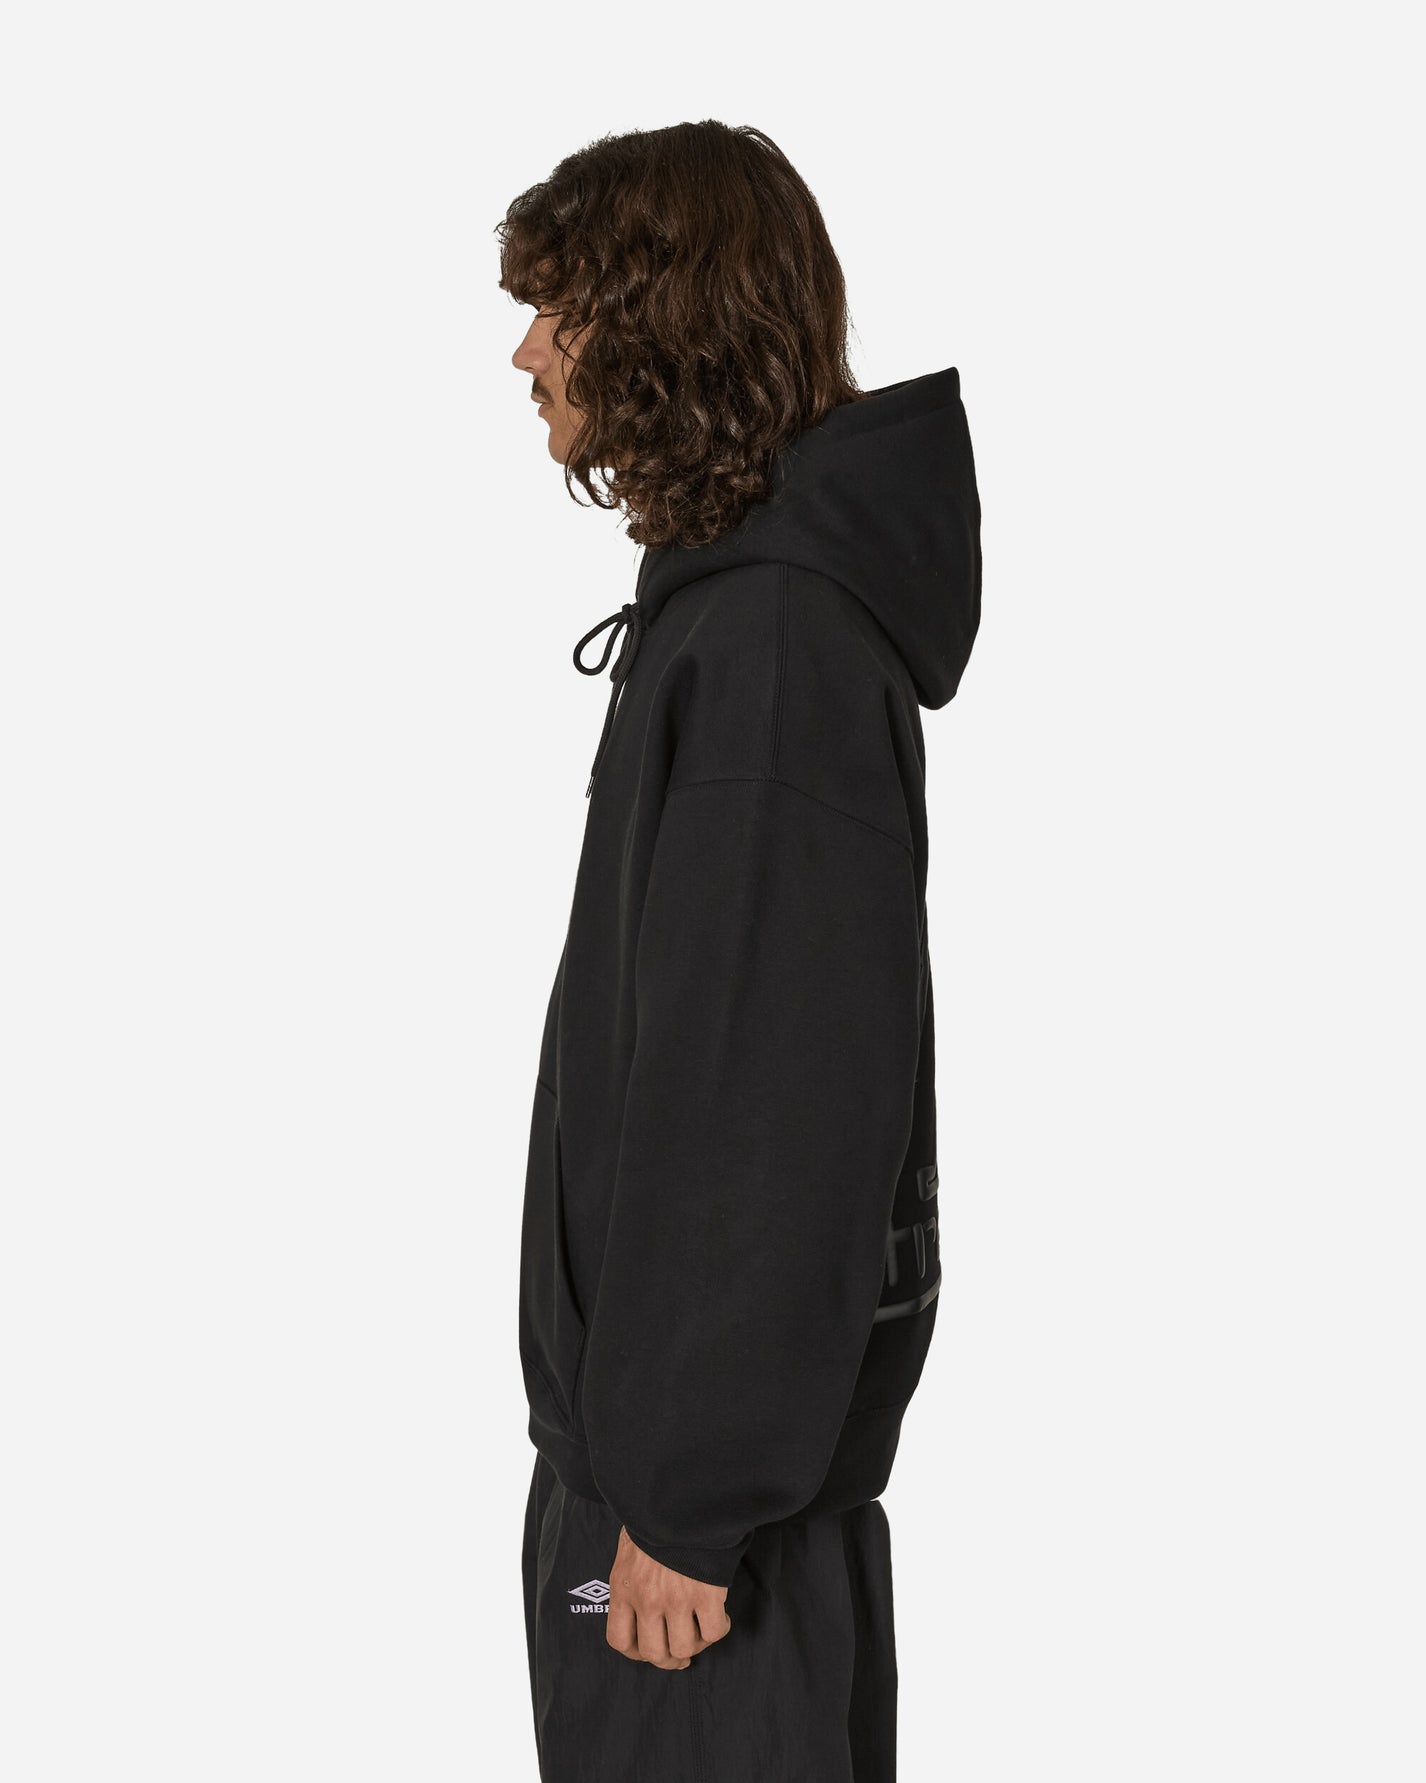 Carhartt WIP Basement Hooded Sweatshirt Black/Grey Sweatshirts Hoodies I032737 0GLXX